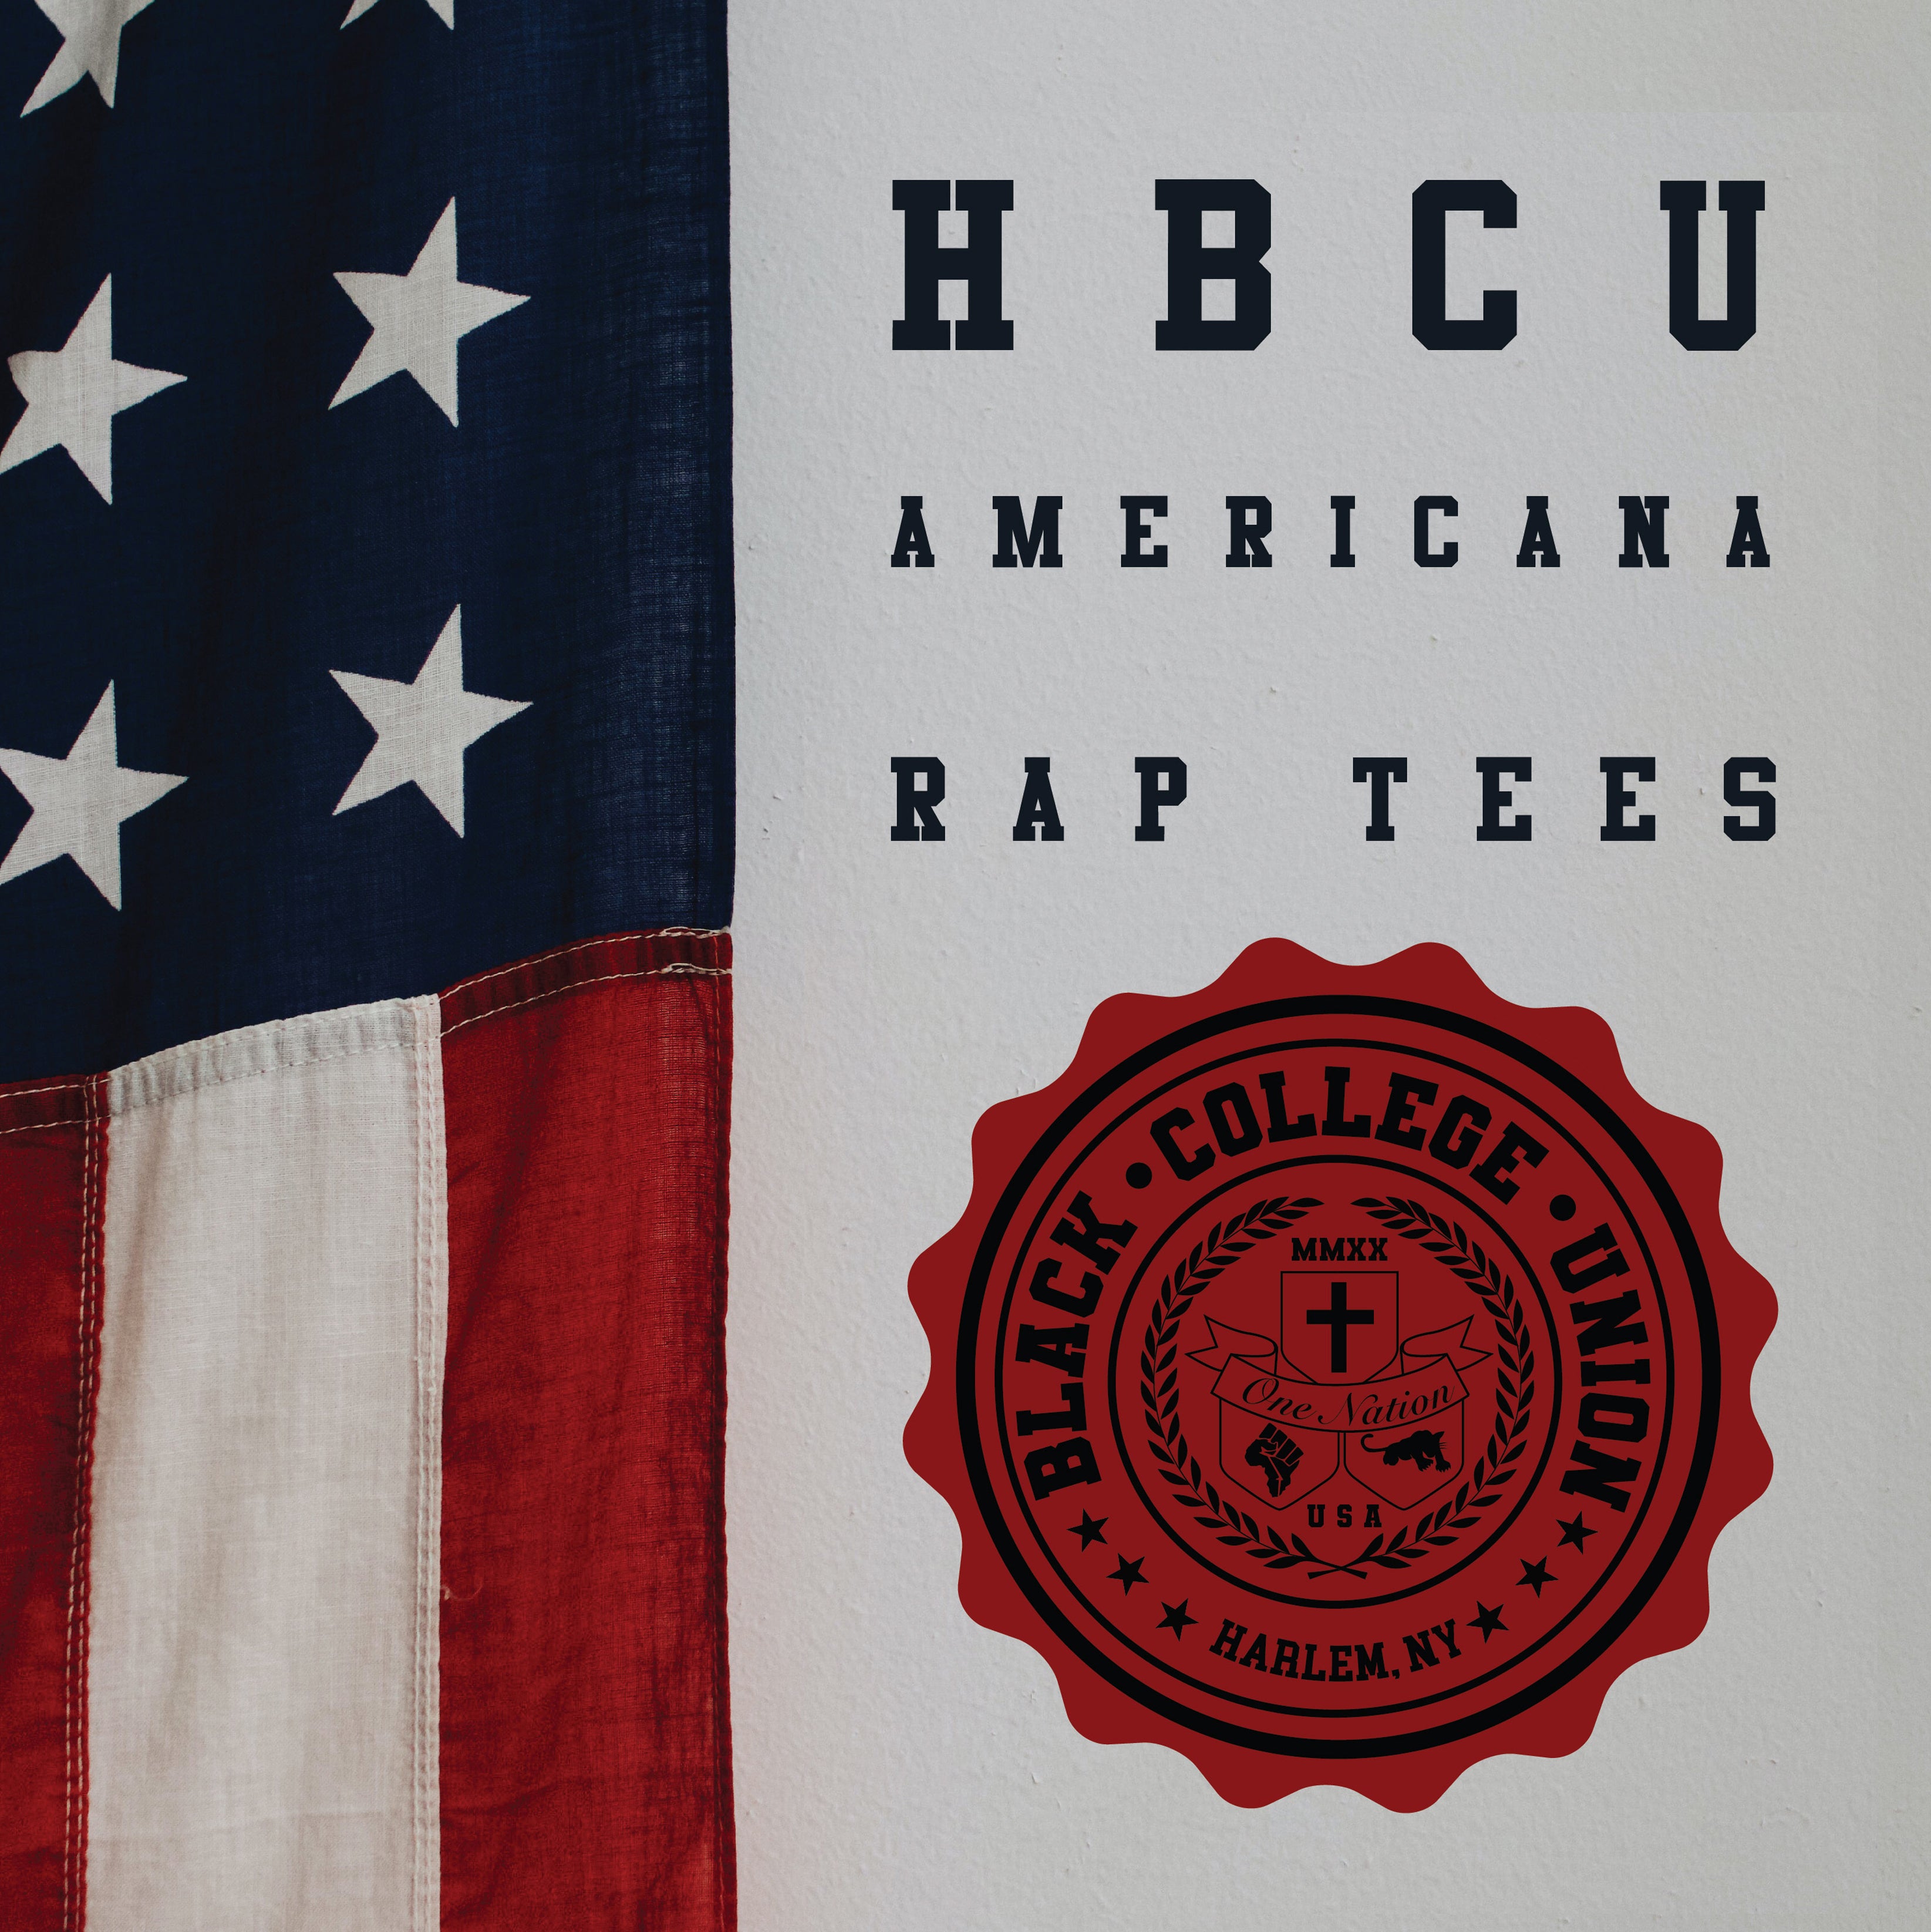 BCU X Champion Original HBCU Americana Rap Tee - Southern at New Orleans [SUNO]